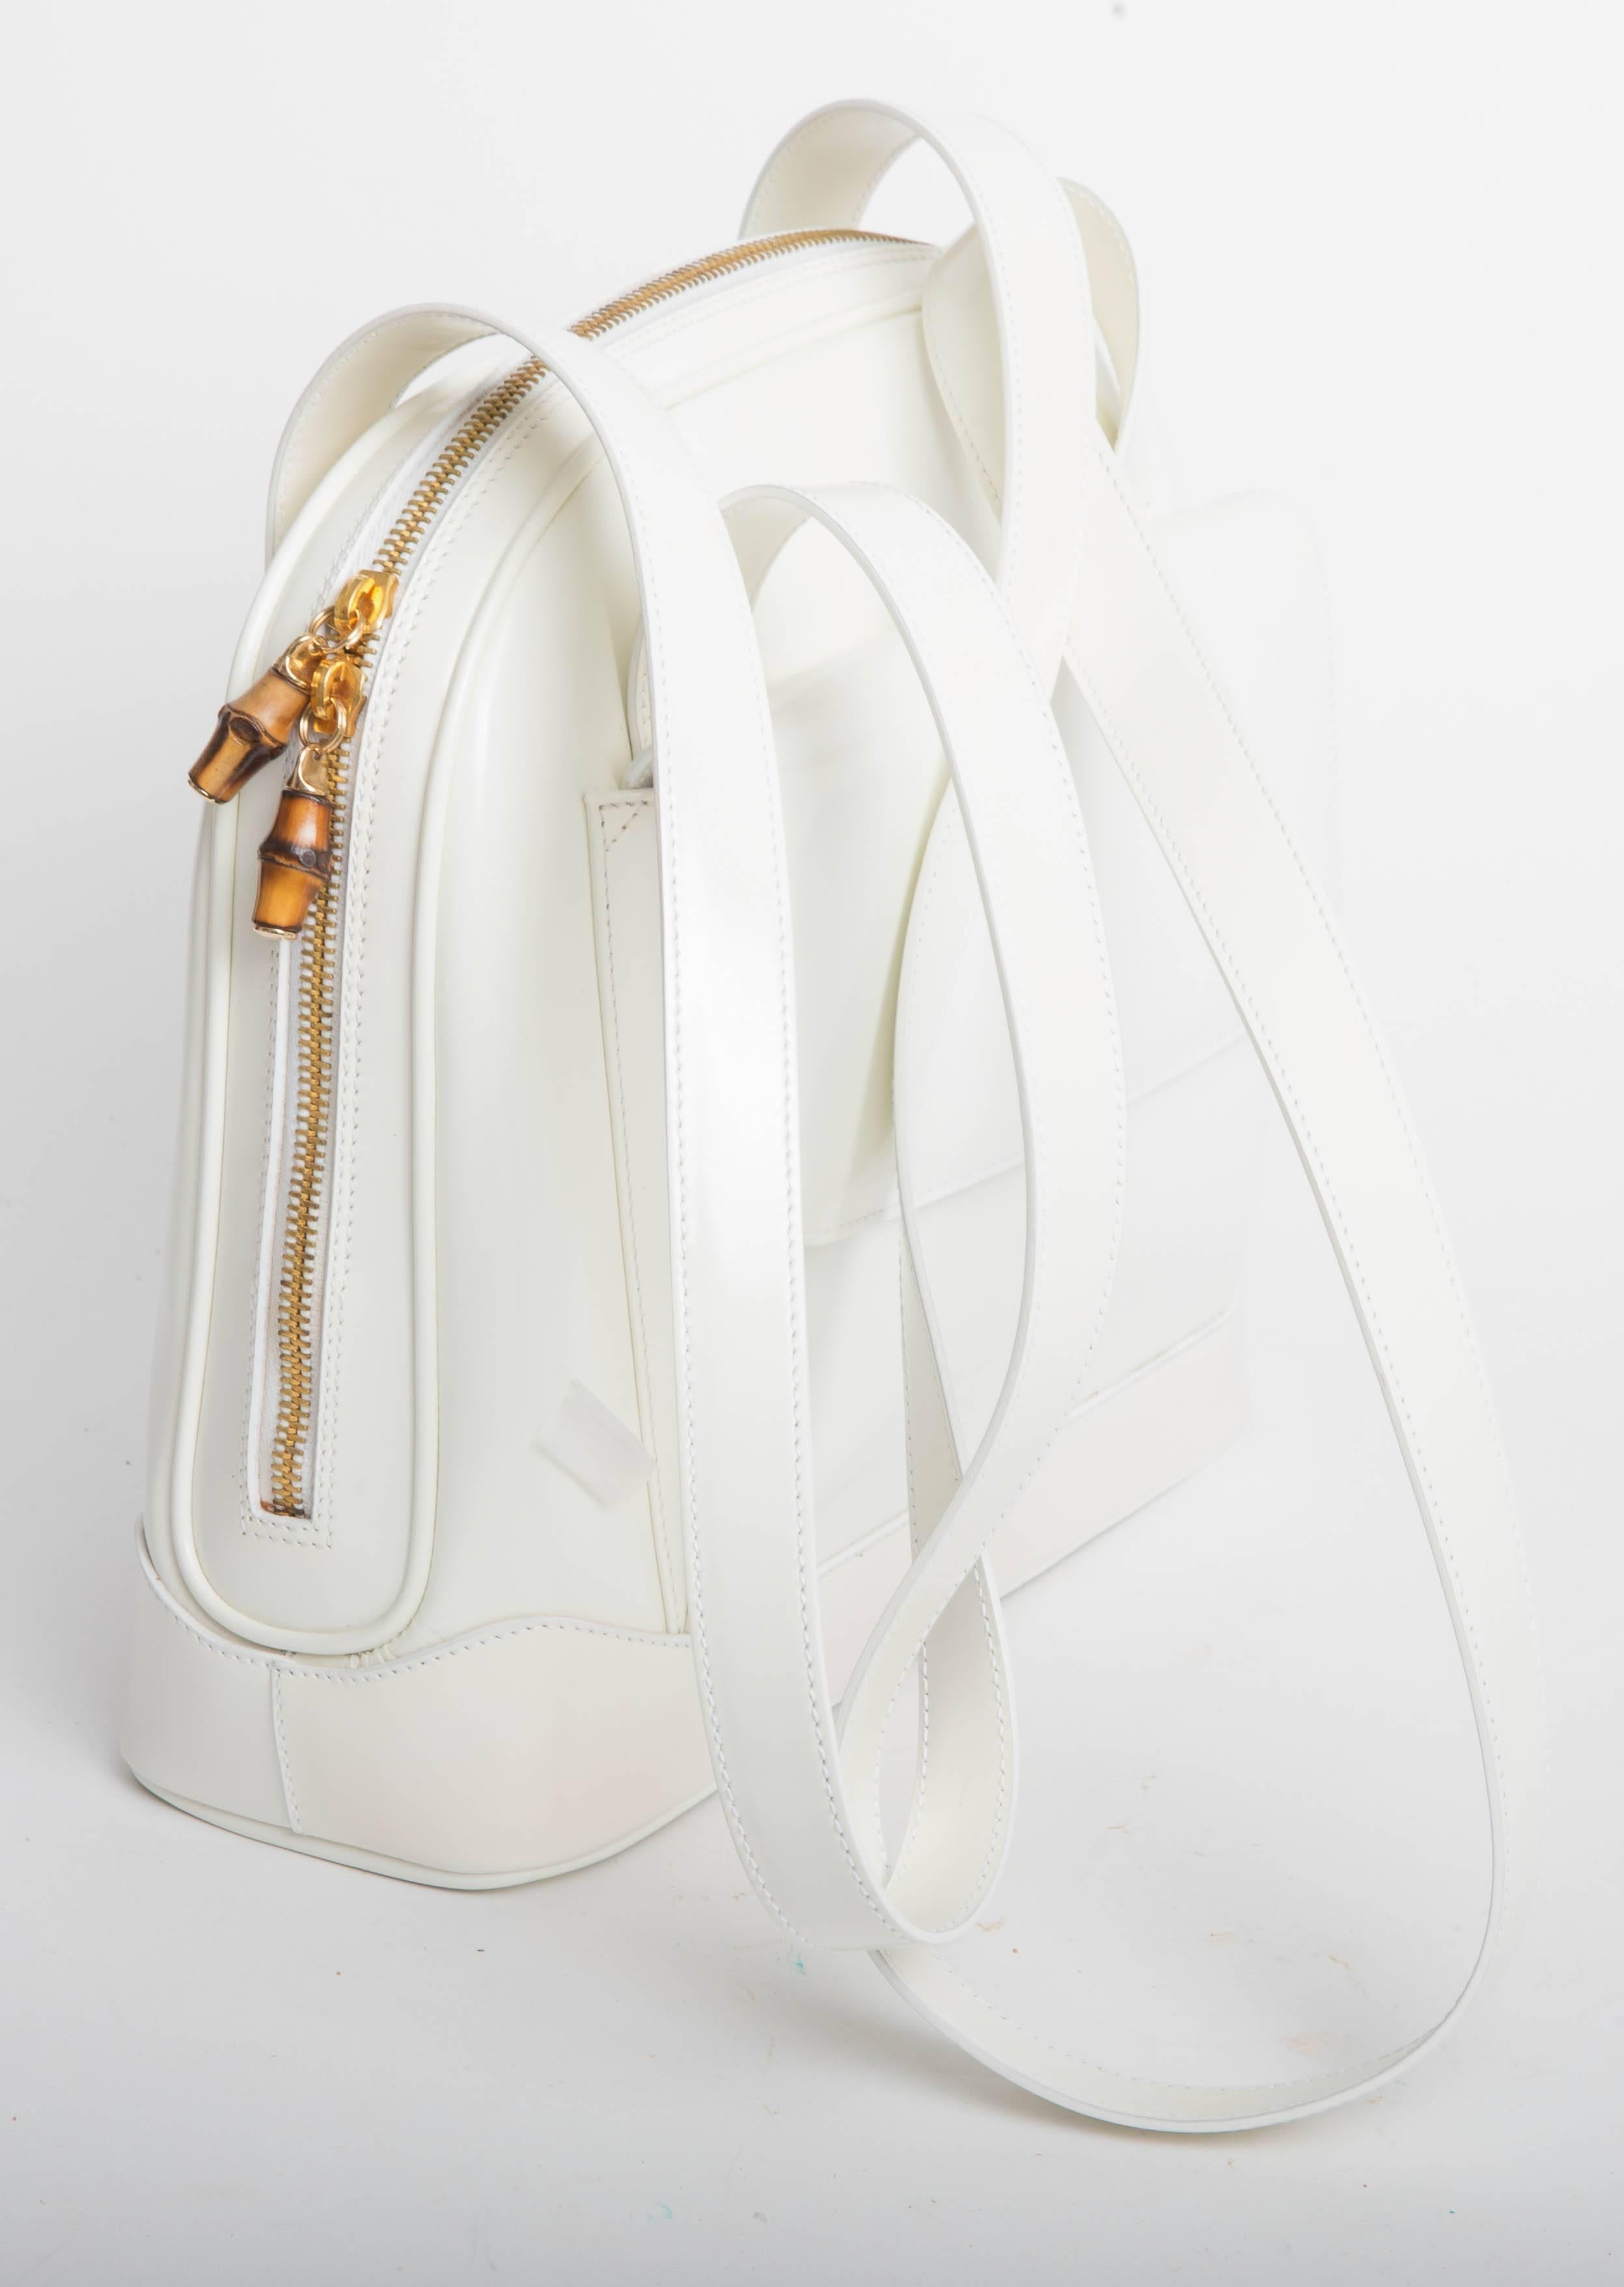 Gucci Vintage White Patent Leather Shoulder Bag features double shoulder straps,front magnetic pocket with 